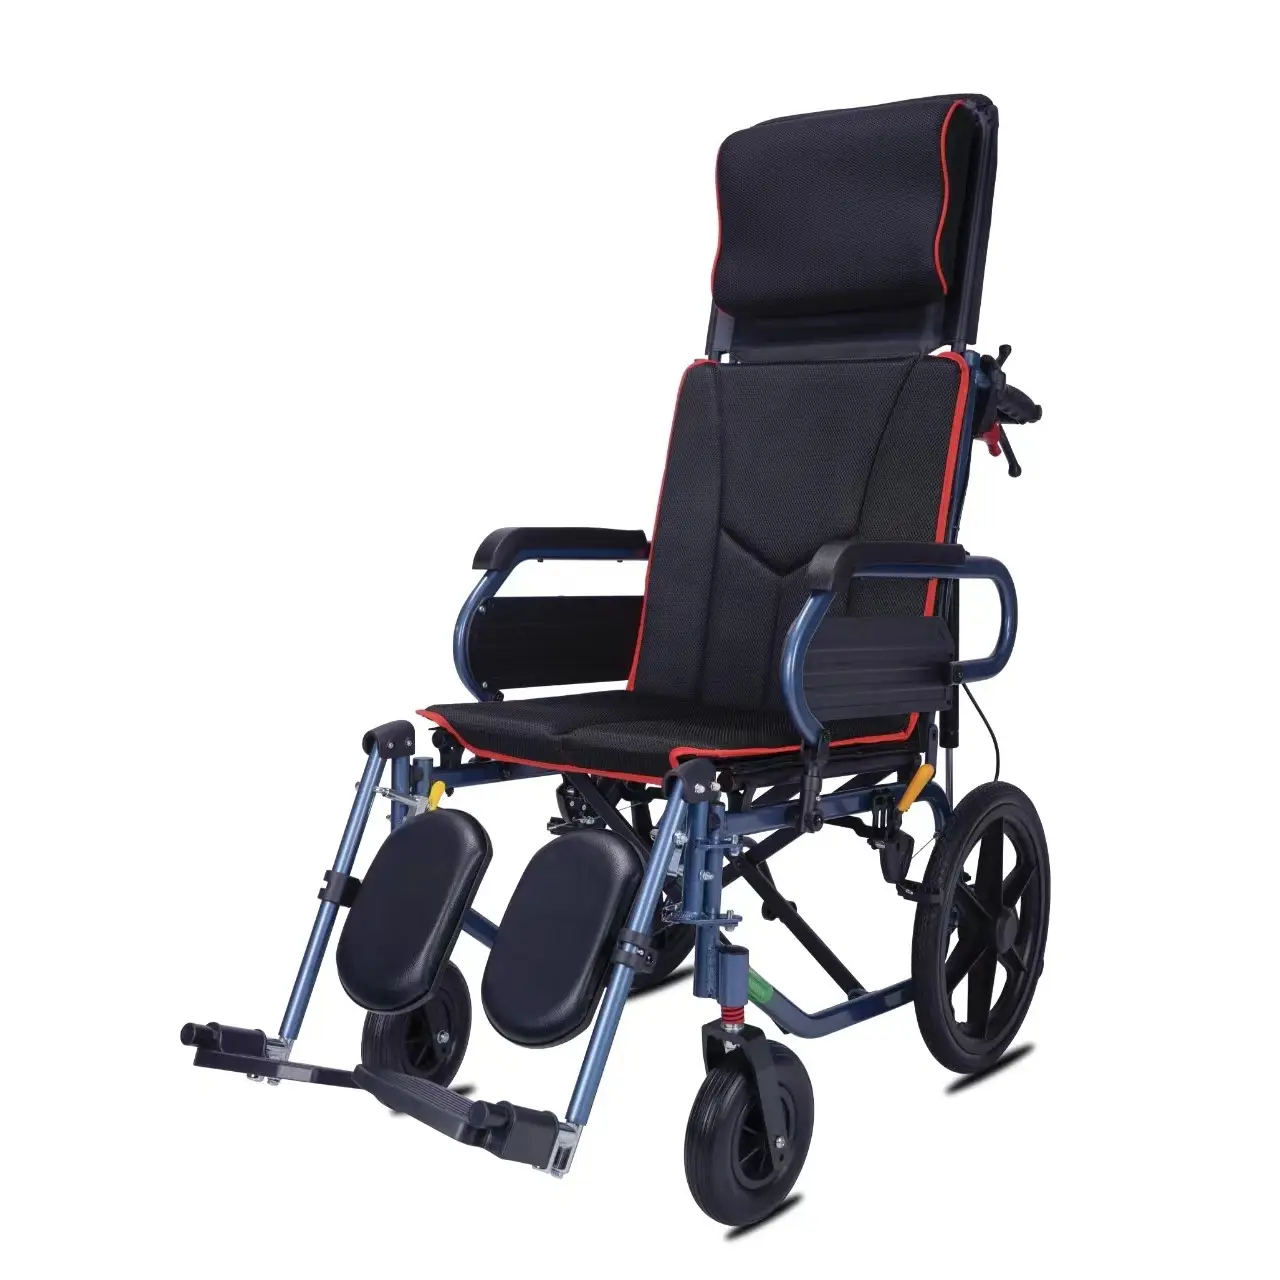 lightweight stroller wheelchair adults seniors aluminum manufacturer look for hydraulic reclining elevating legrest factory